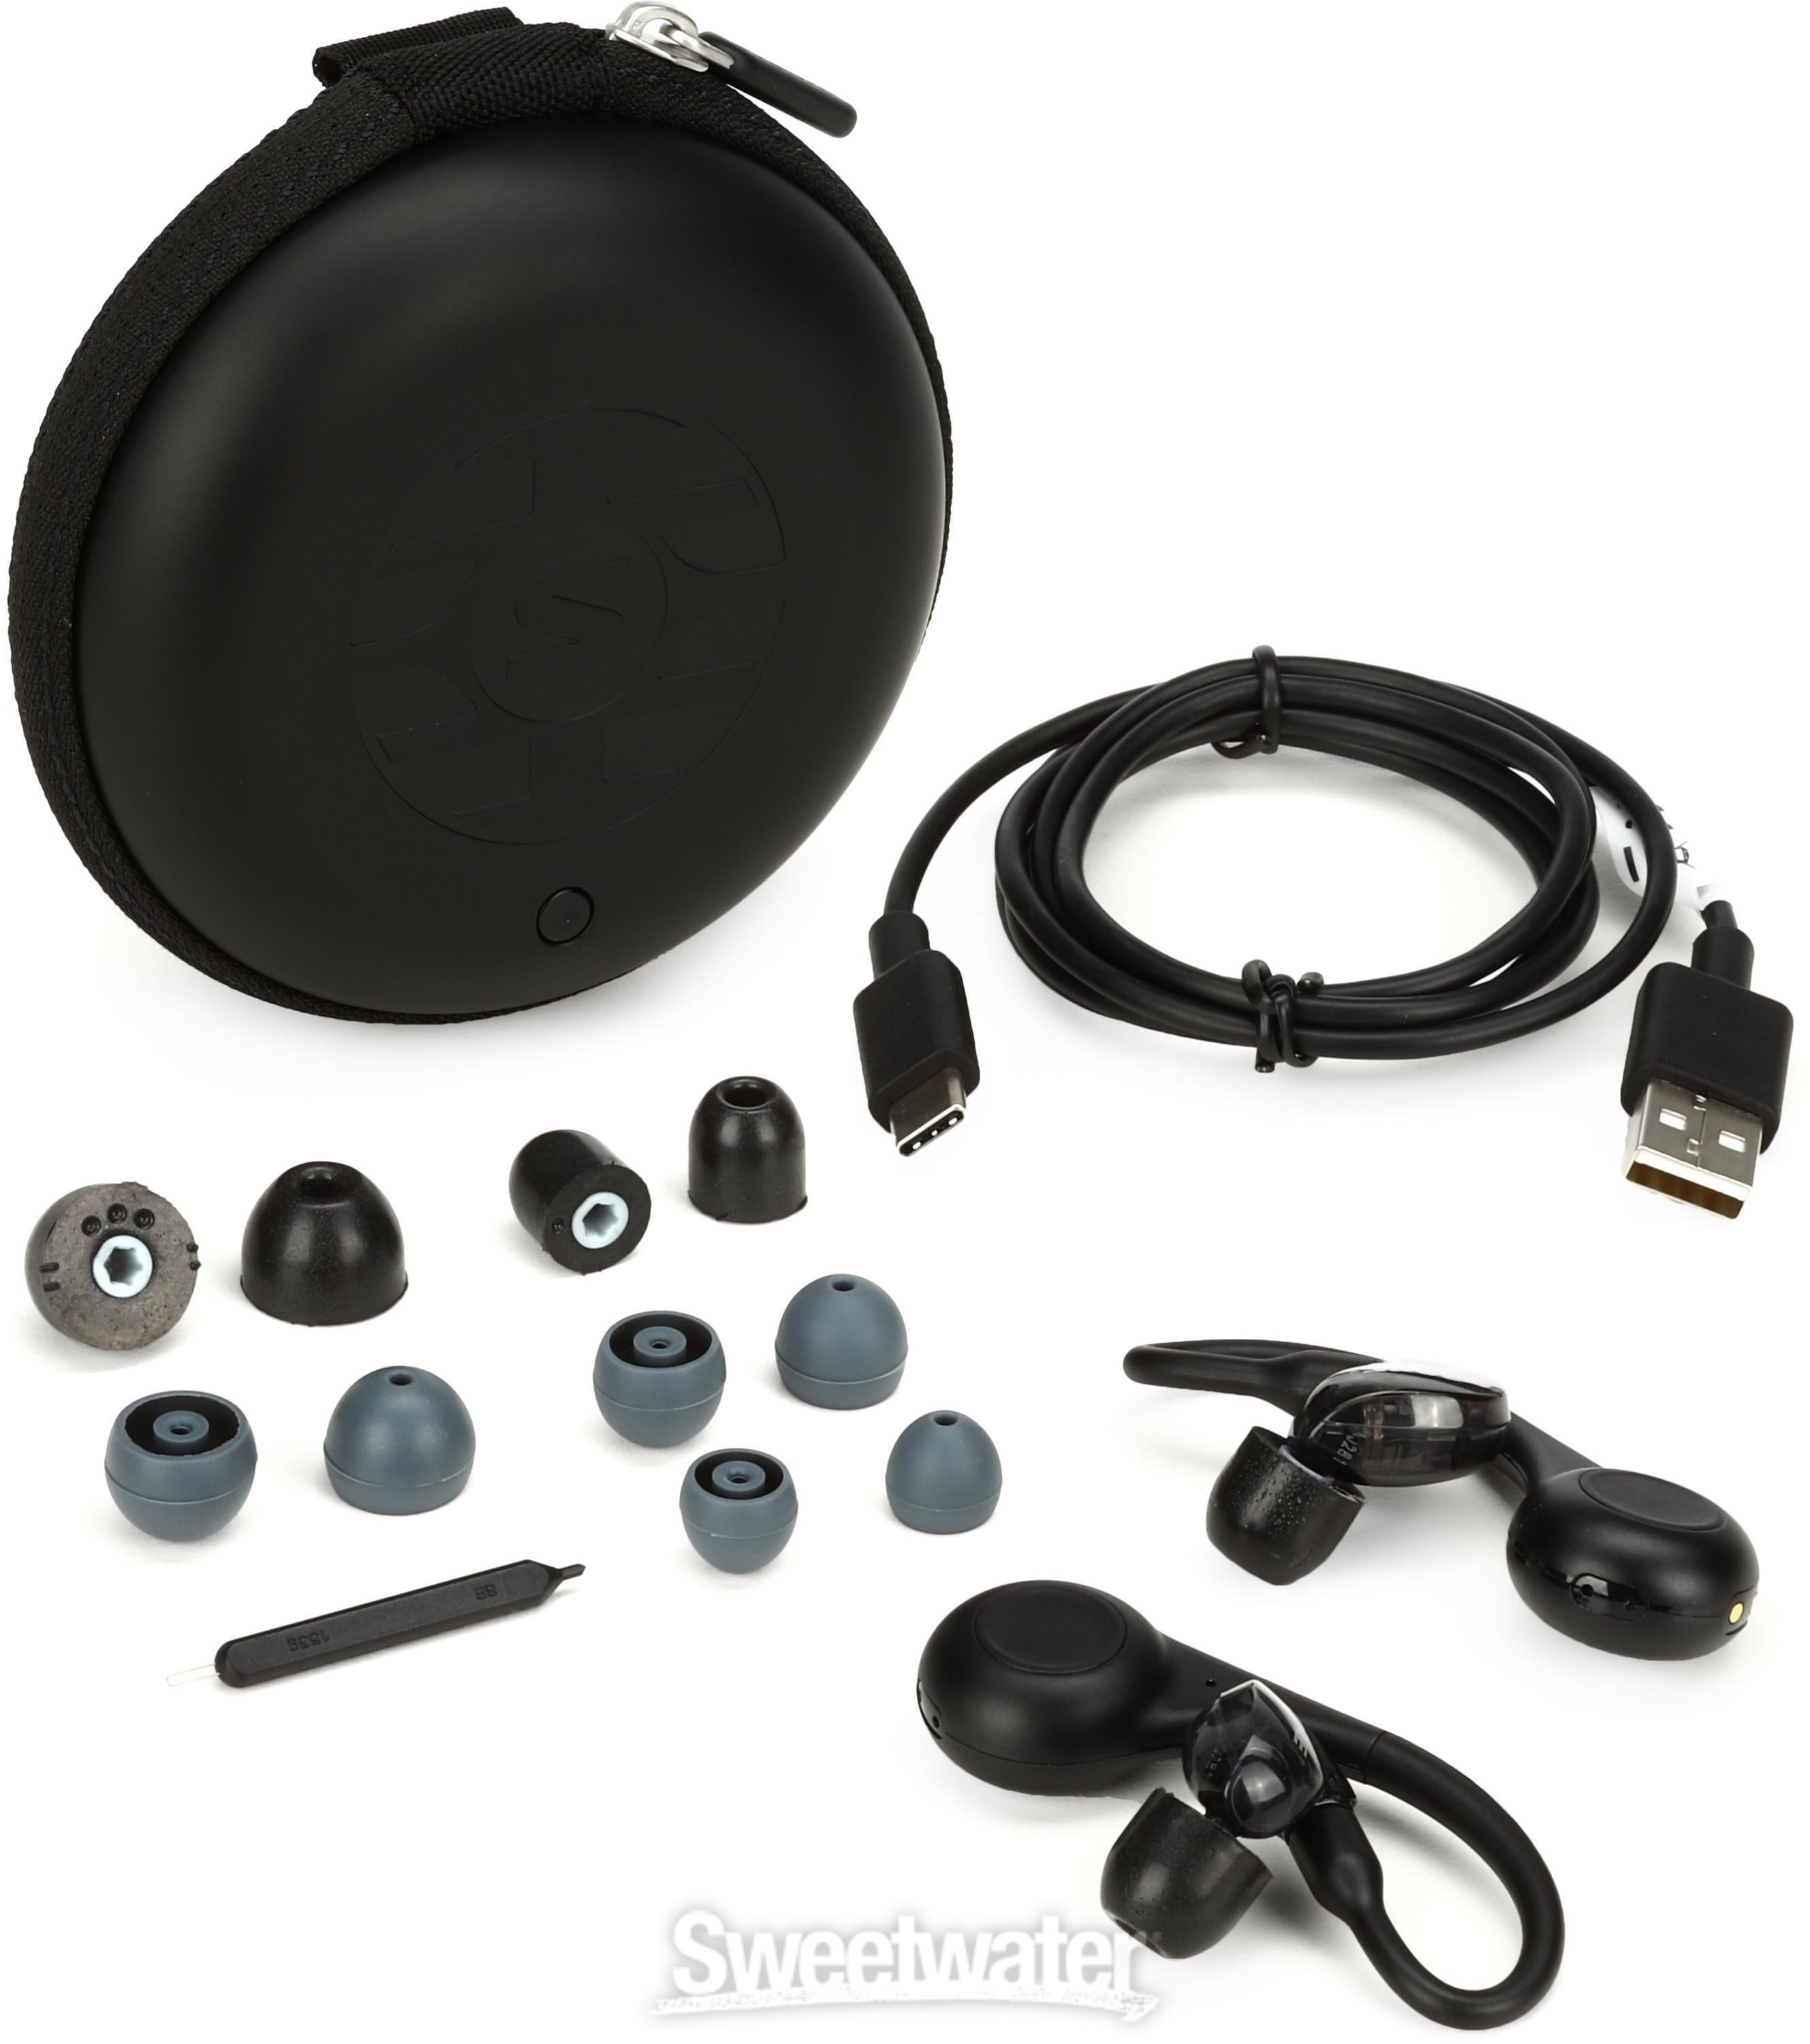 Shure Aonic 215 True Wireless Earphones with Bluetooth - Black 